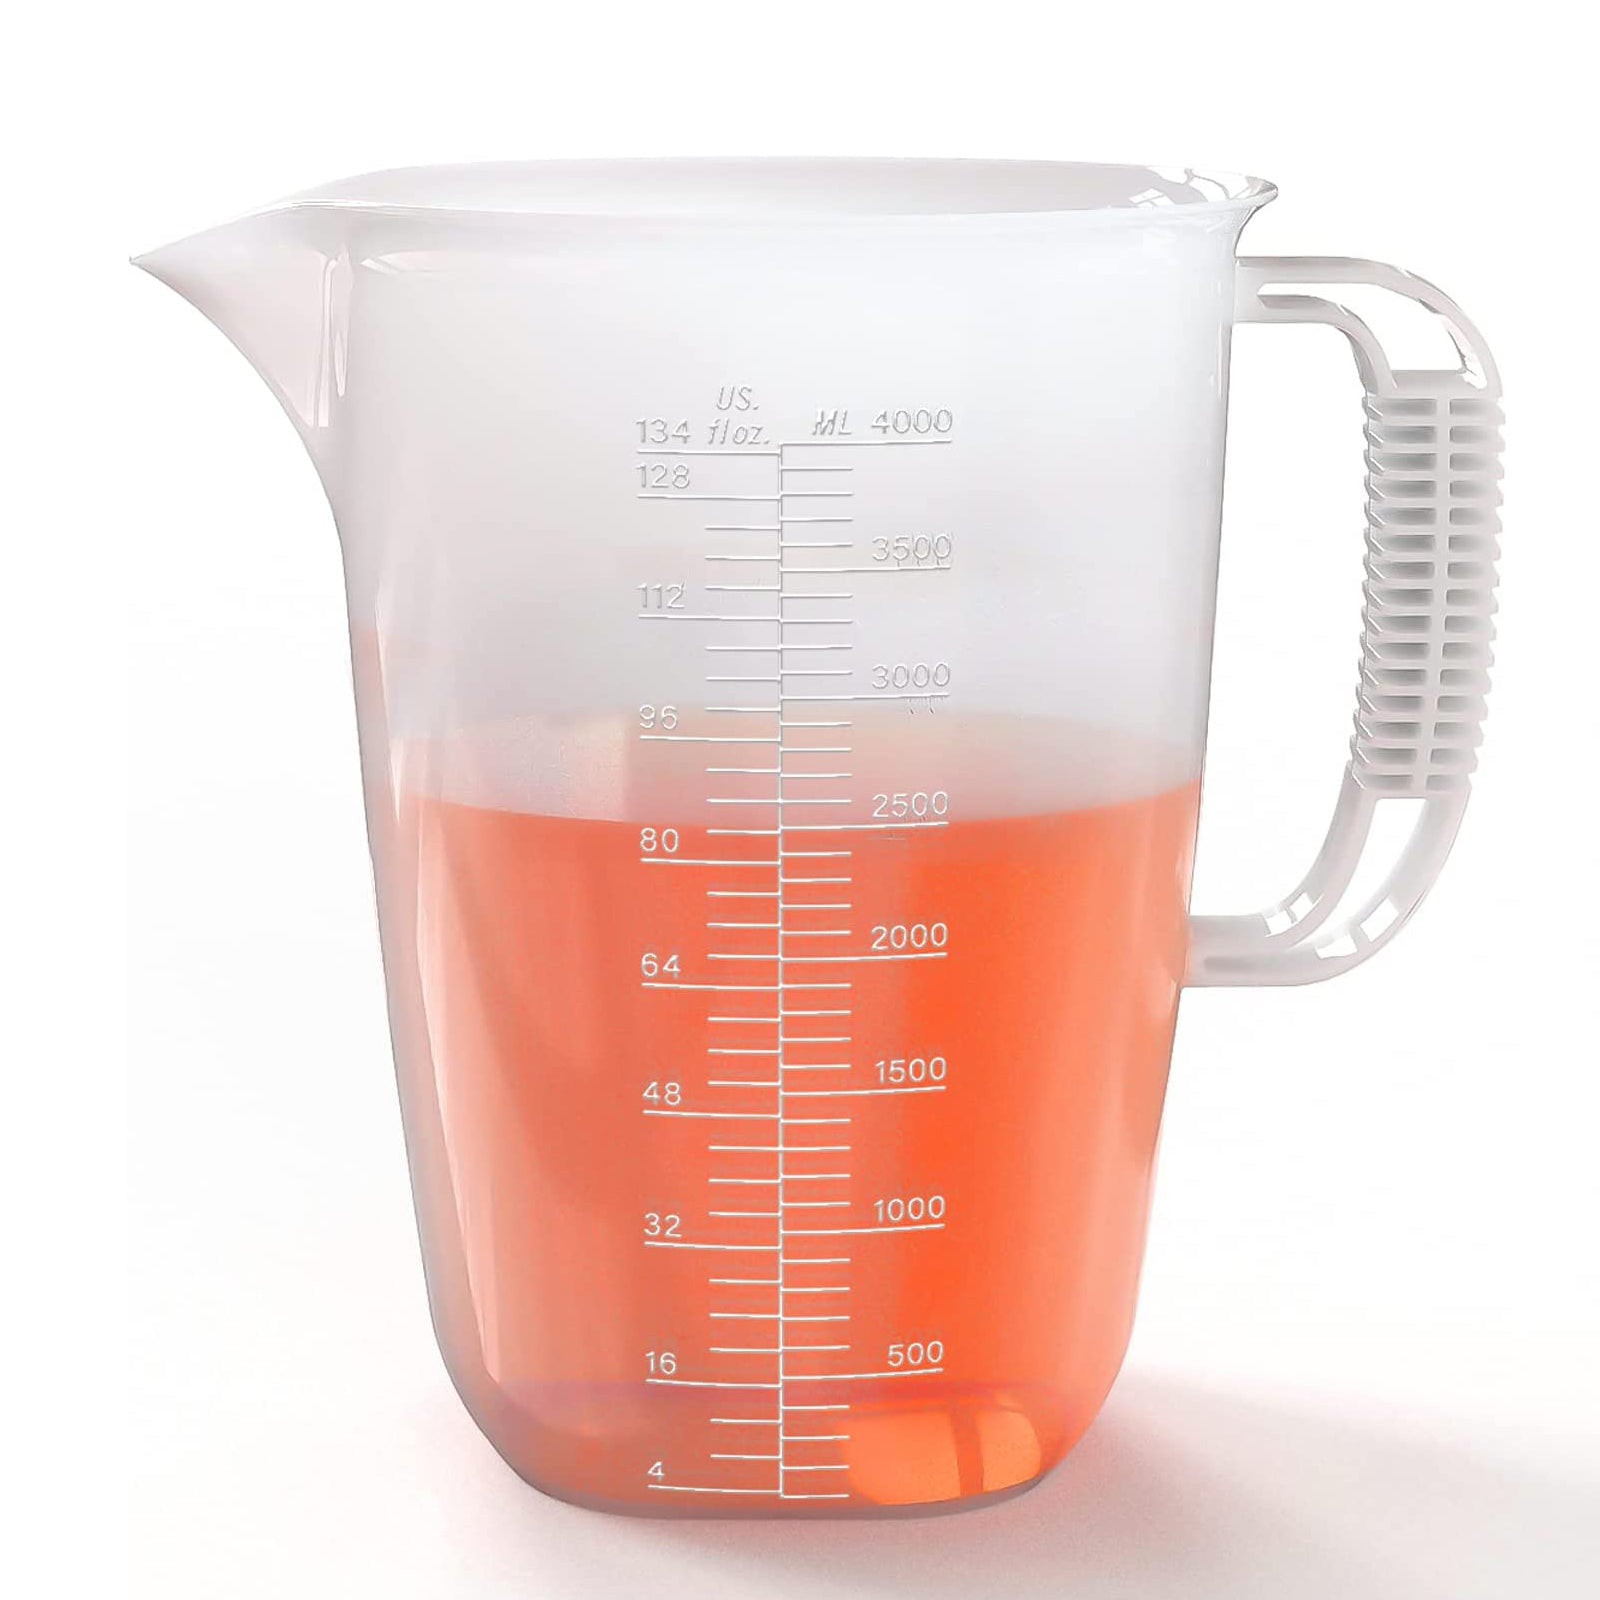 Great Jones Beyond Measure – 4-Cup Glass Measuring Cup